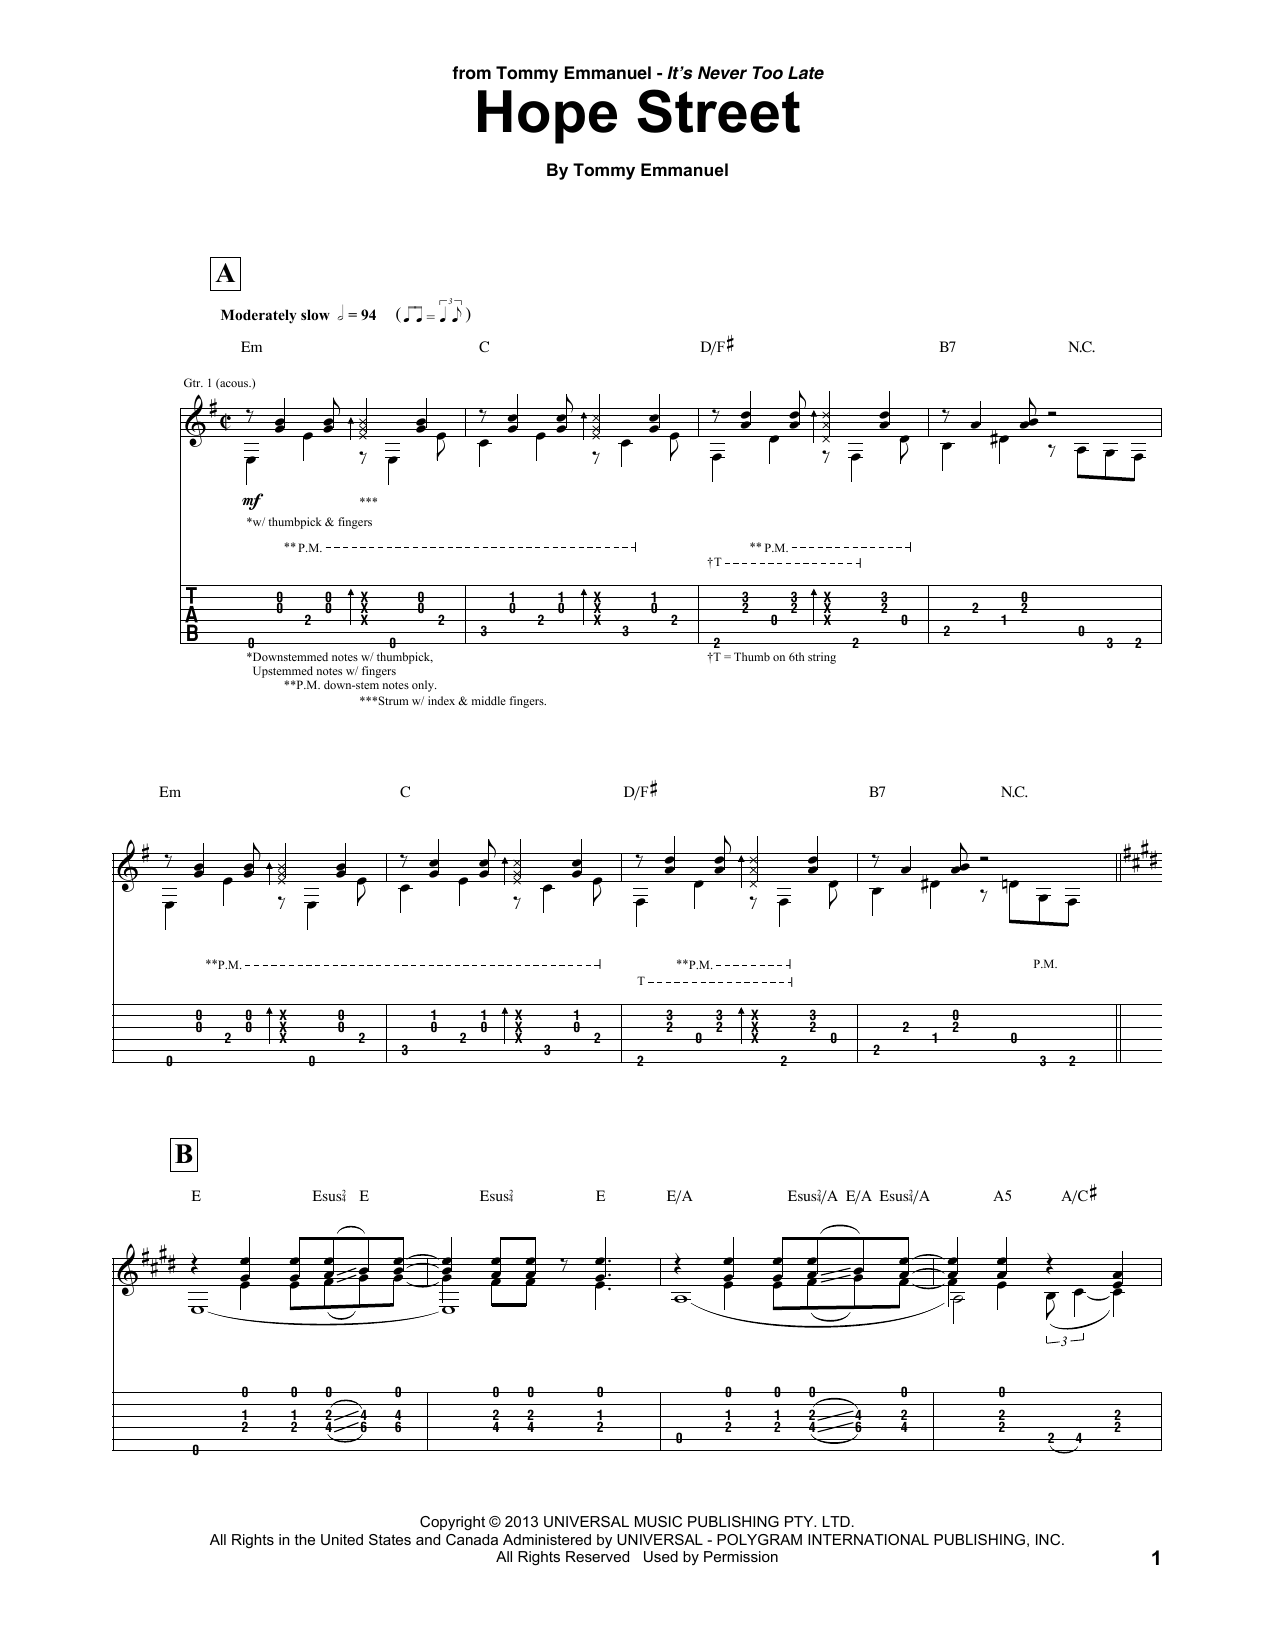 Tommy Emmanuel Hope Street Sheet Music Notes & Chords for Guitar Tab - Download or Print PDF